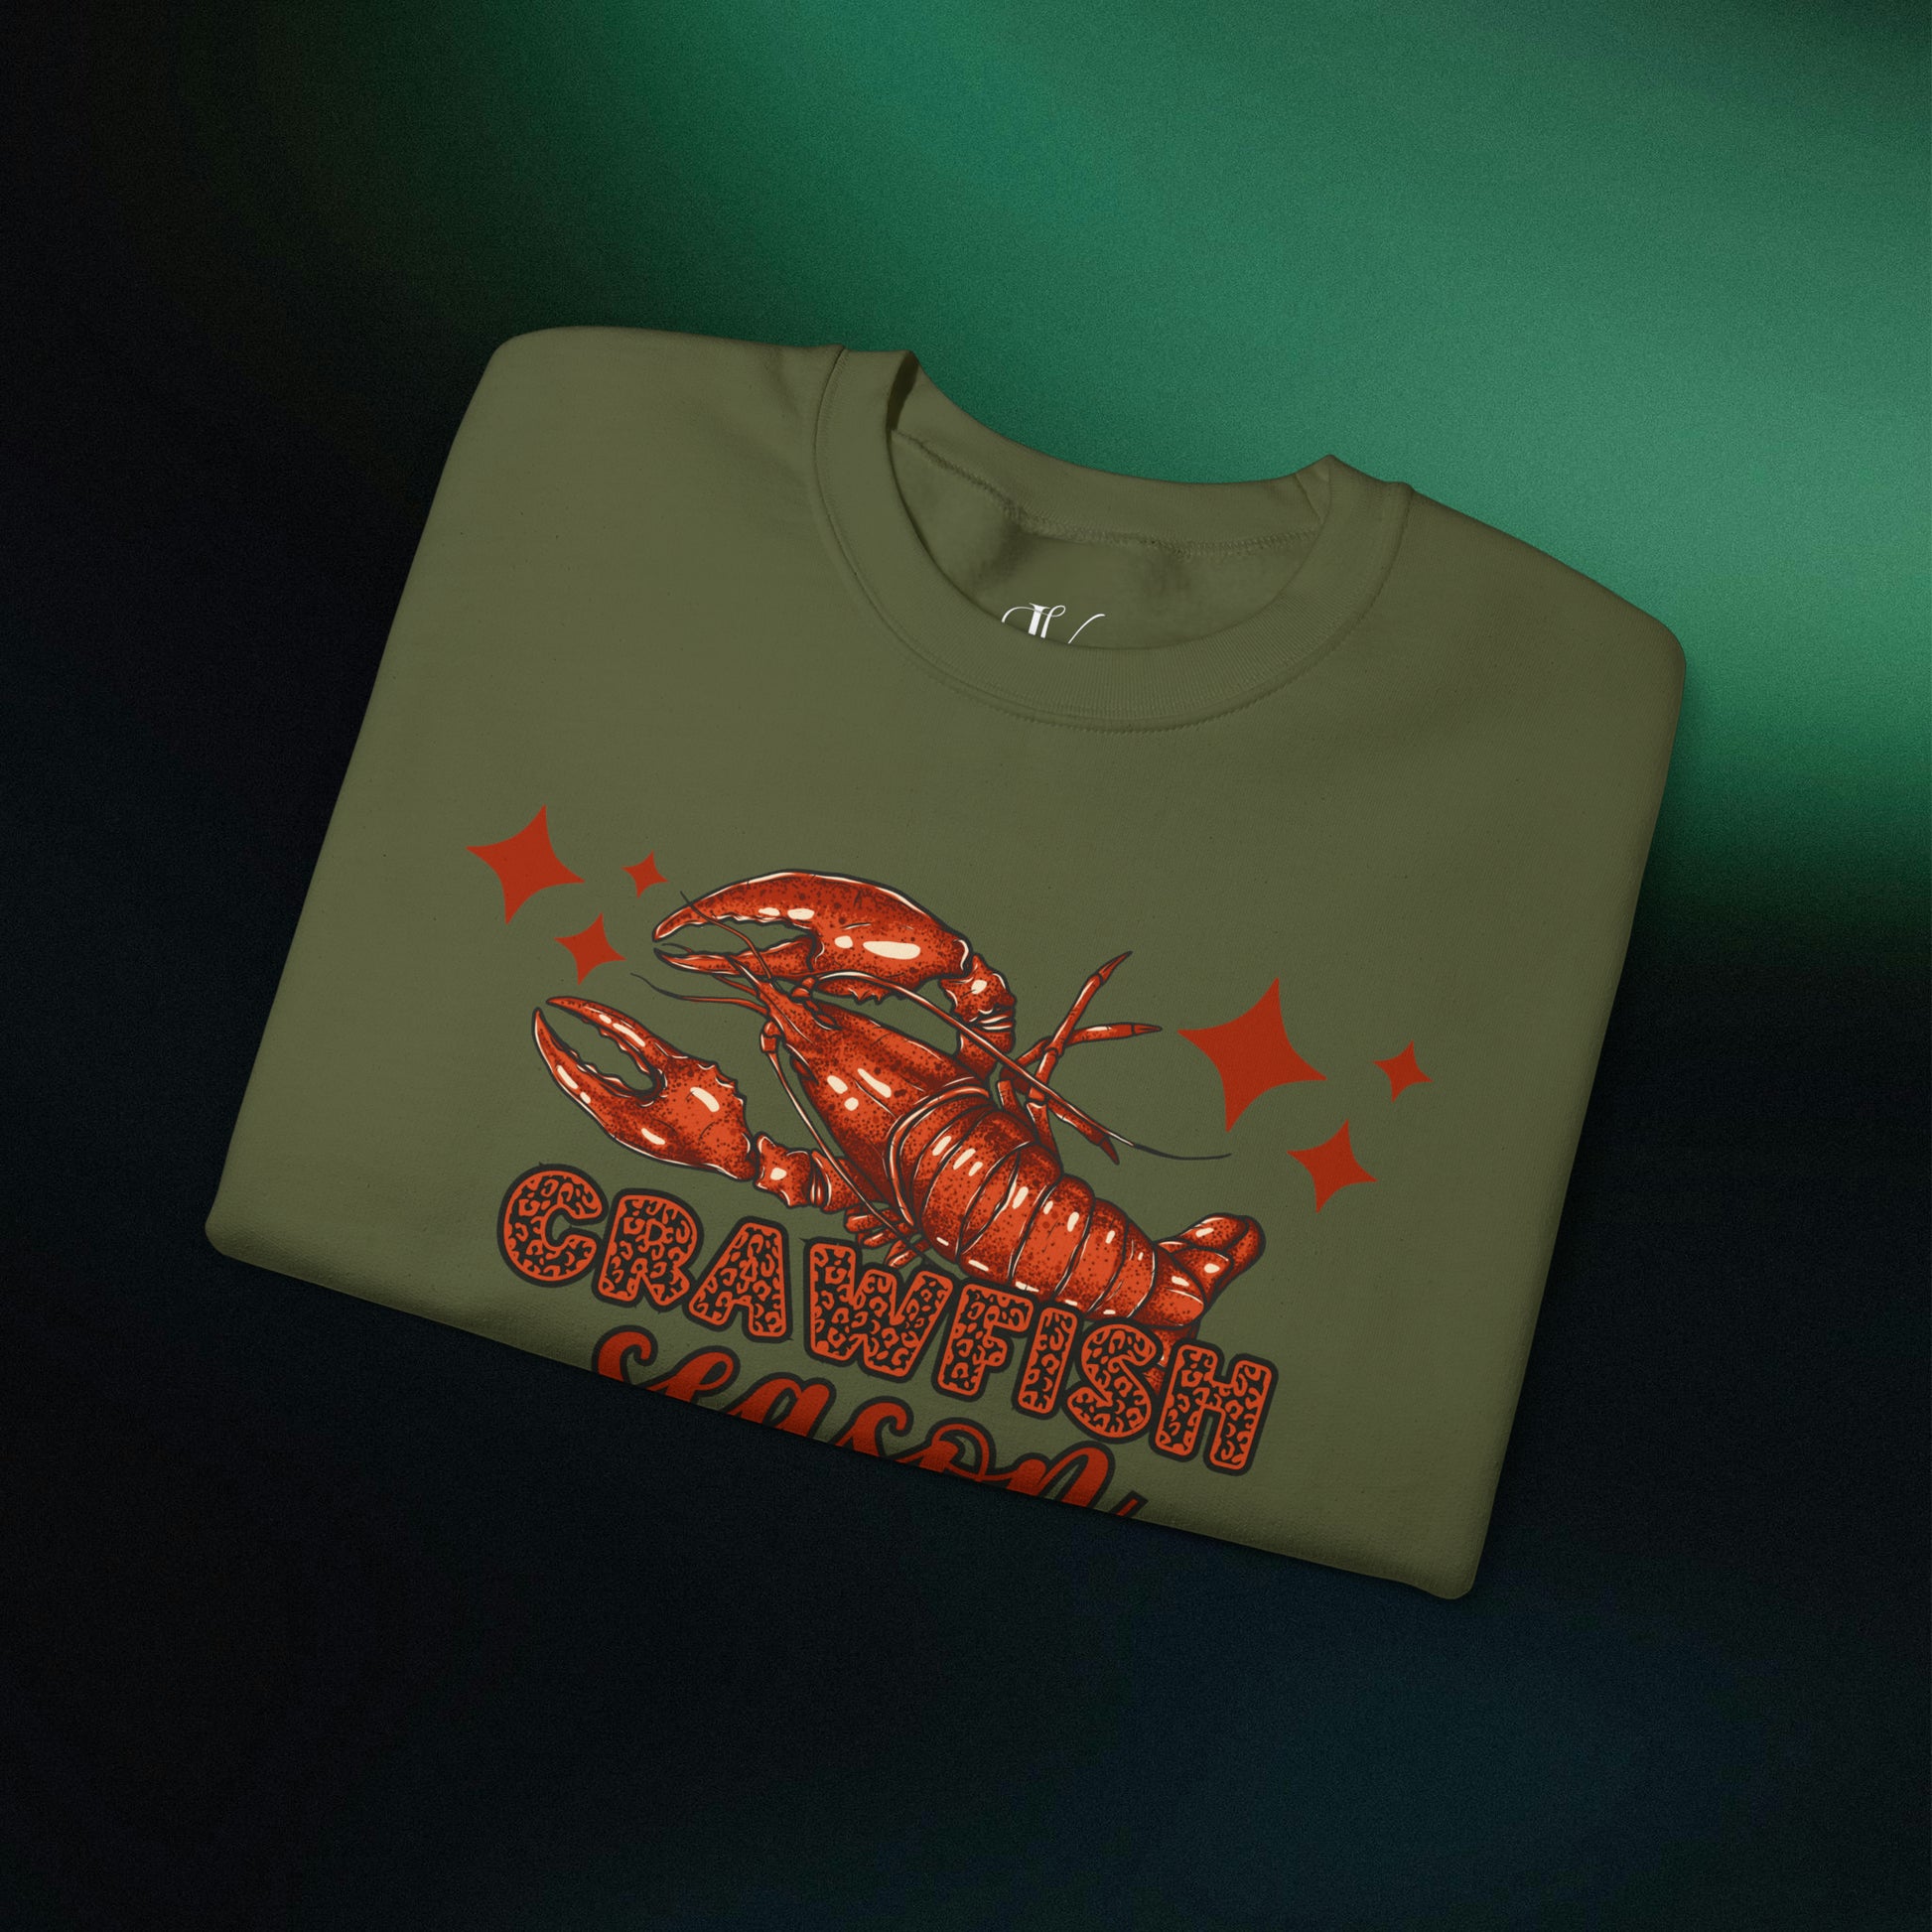 Celebrate Crawfish Season: Mardi Gras Sweatshirt, Crawfish Lovers Sweater, Louisiana Crew Tee | Crawfish Season Apparel - Embrace the Flavor and Fun of the Season with Stylish Crawfish-Themed Wear! Sweatshirt   